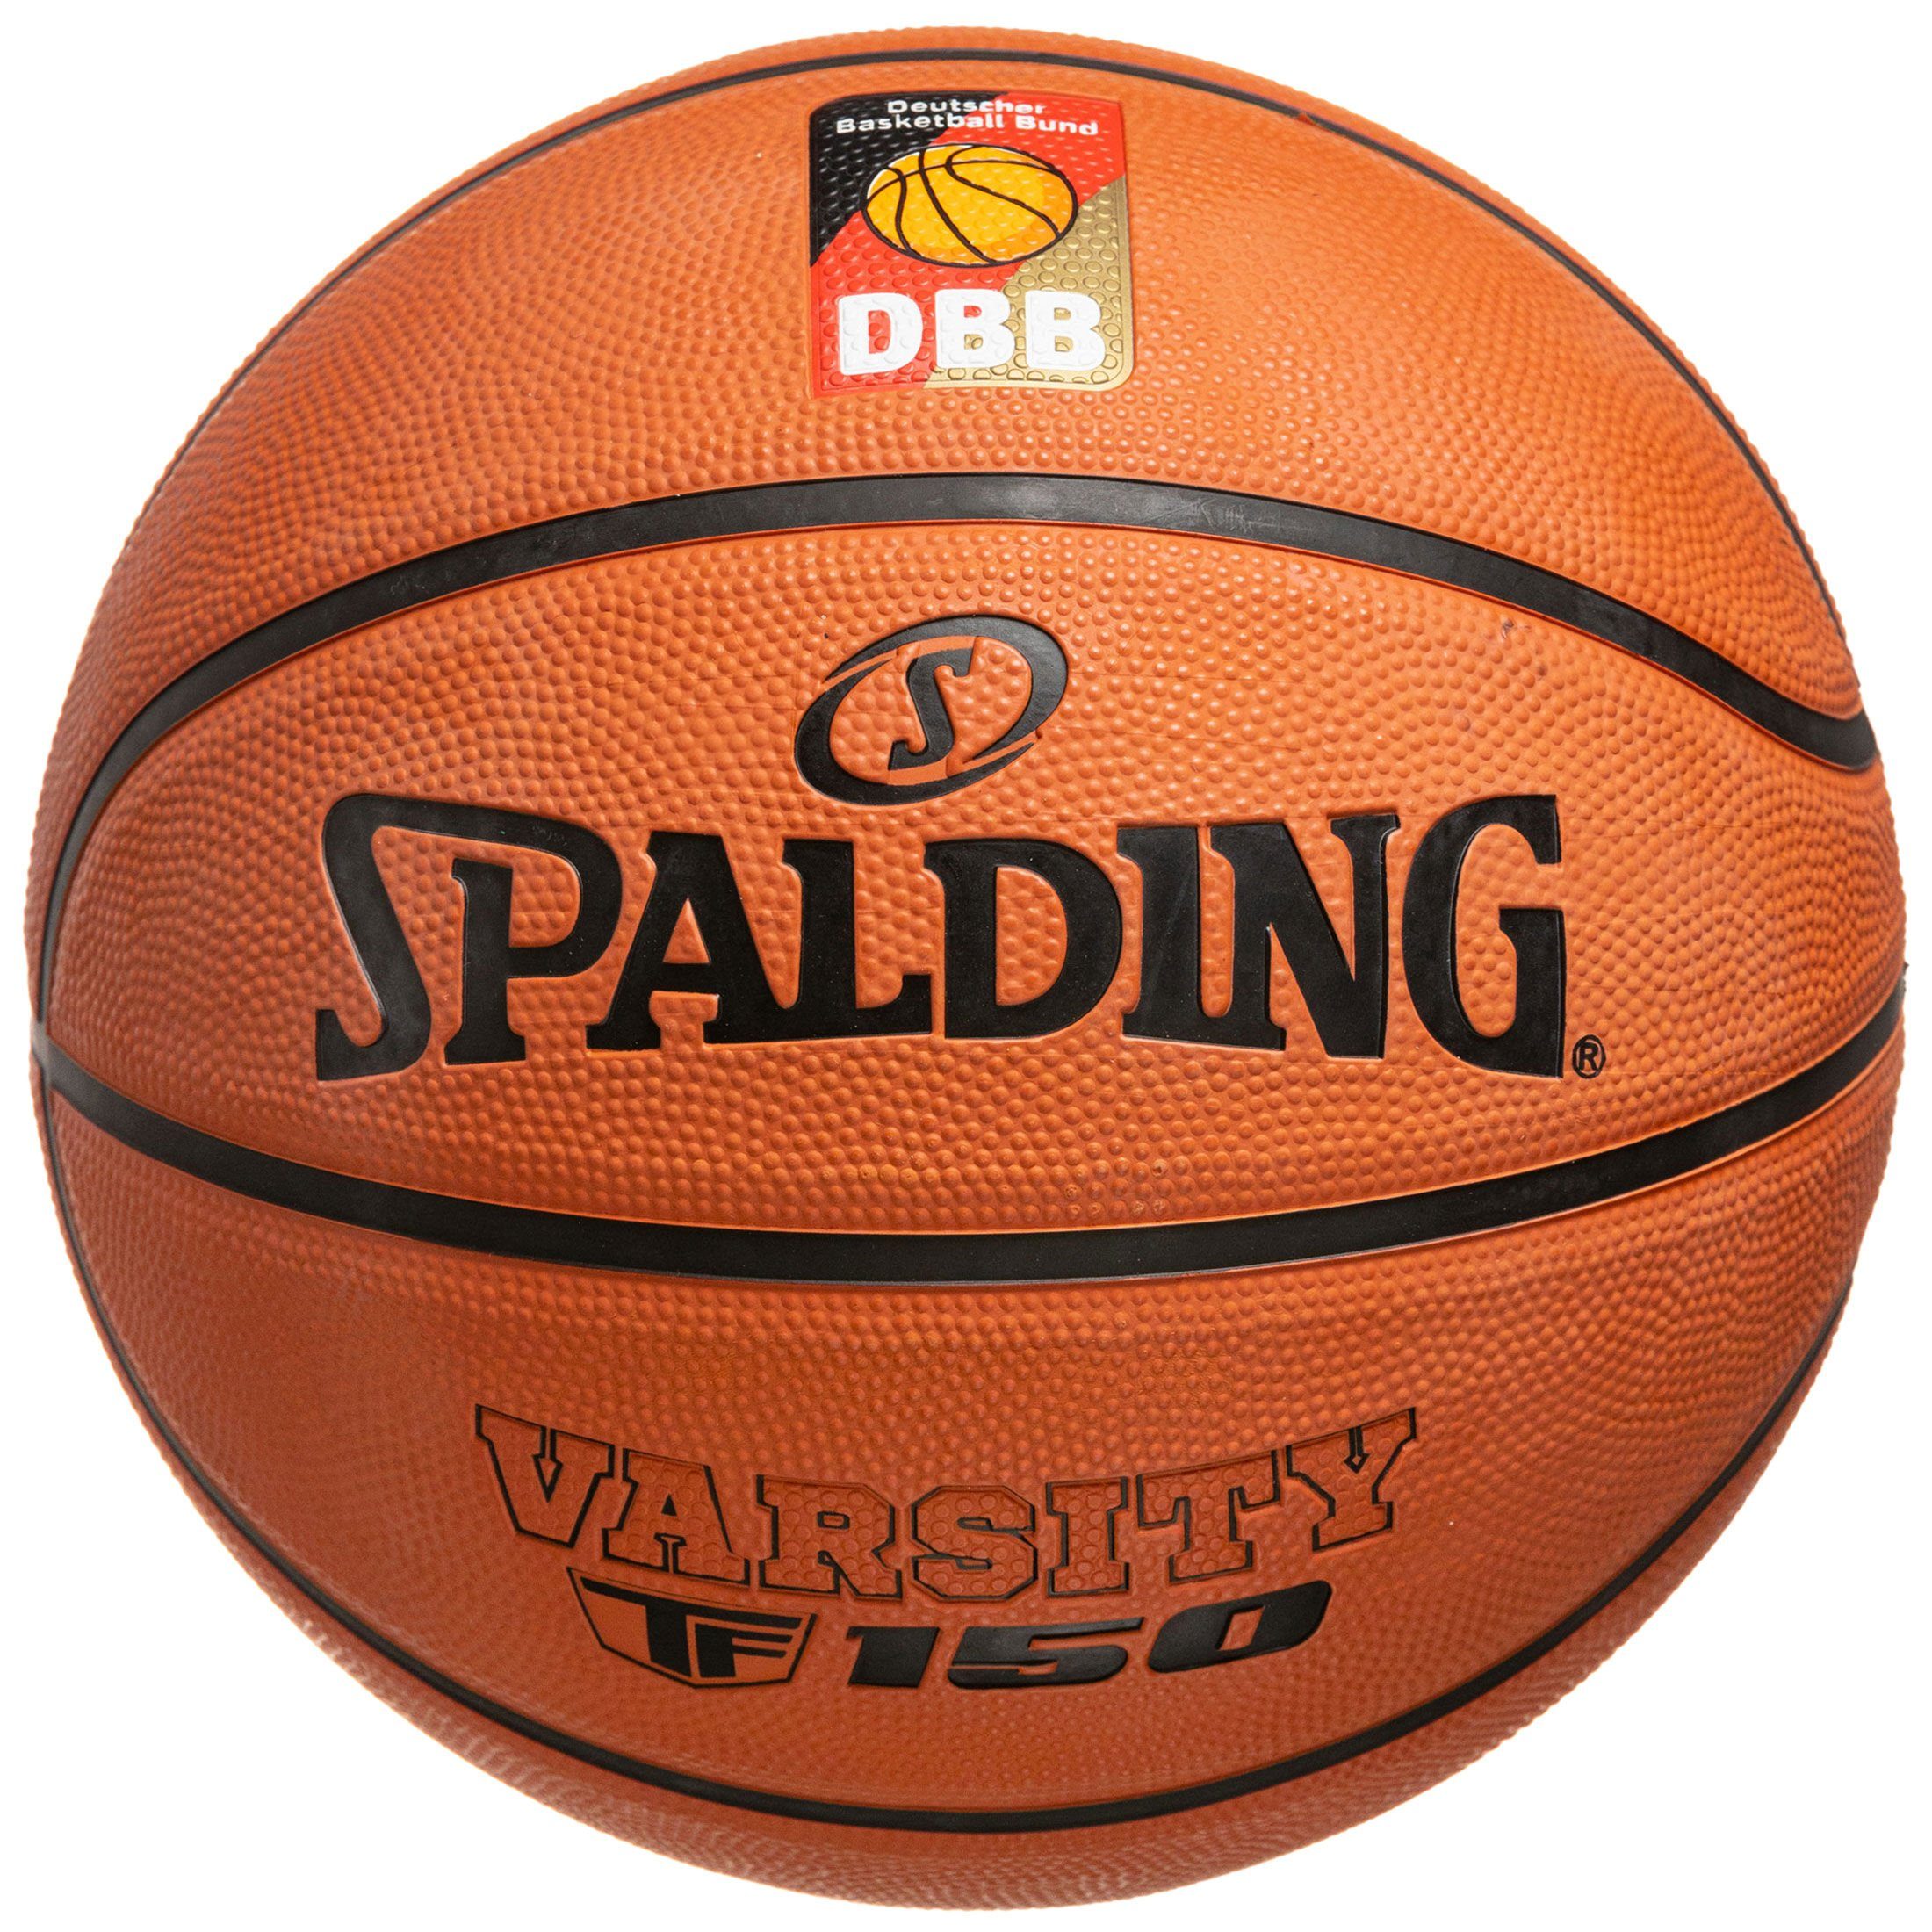 Spalding Basketball DBB React TF-250 Basketball